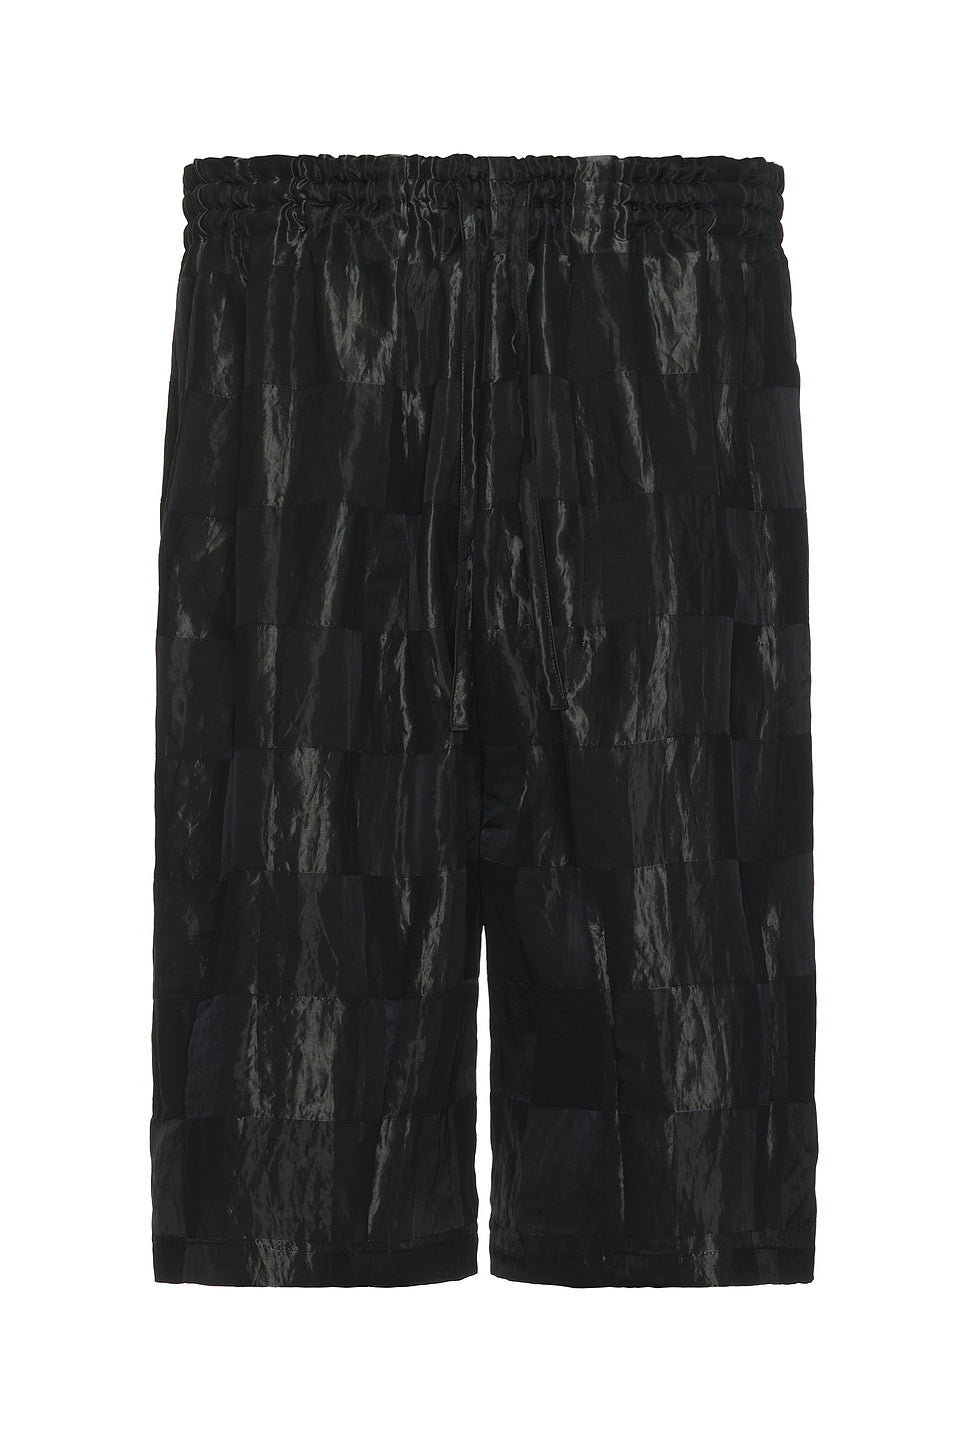 H.d.p. Bright Cloth Checker Short In Black